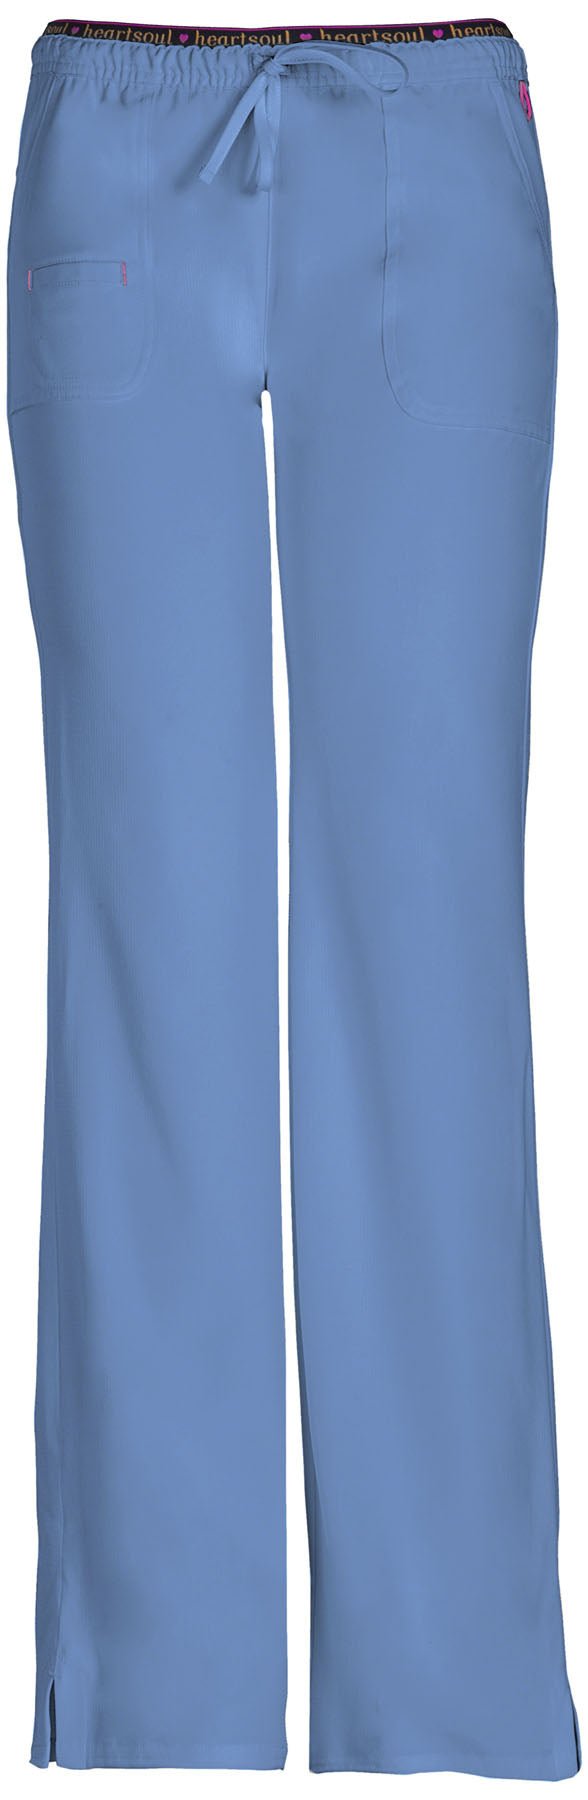 HeartSoul Low Rise Drawstring Pant 20110 in Ciel, Pewter, Royal, Turquoise - Scrubs Select